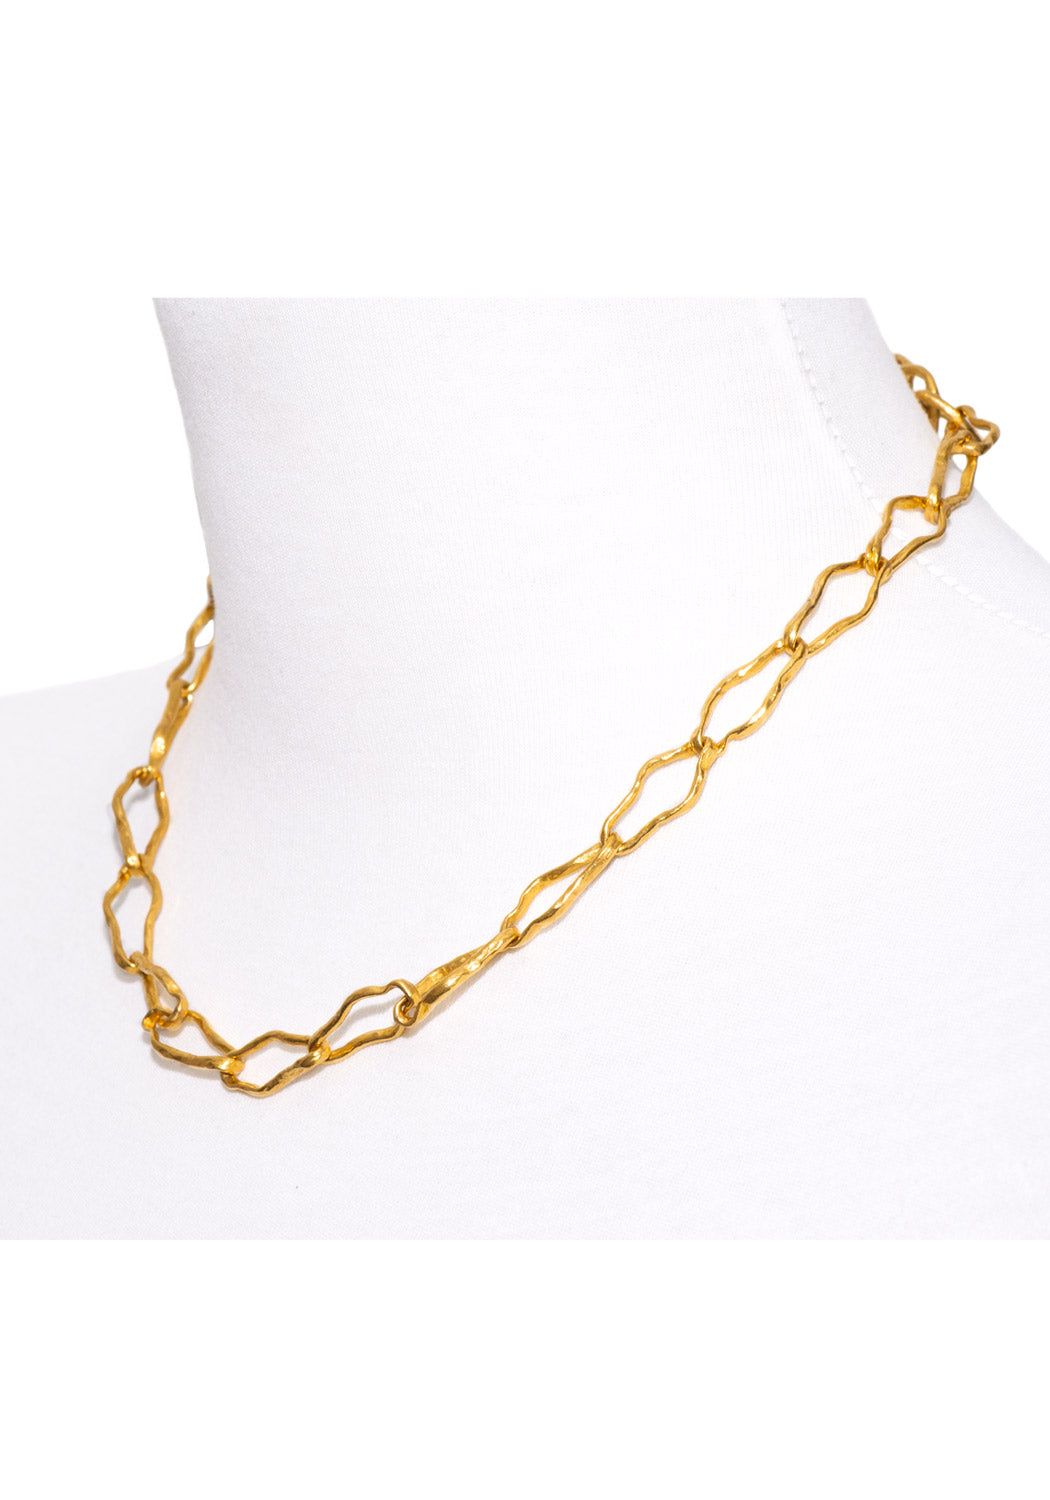 Lika Behar 24k Yellow Gold 18" Organic Link Necklace